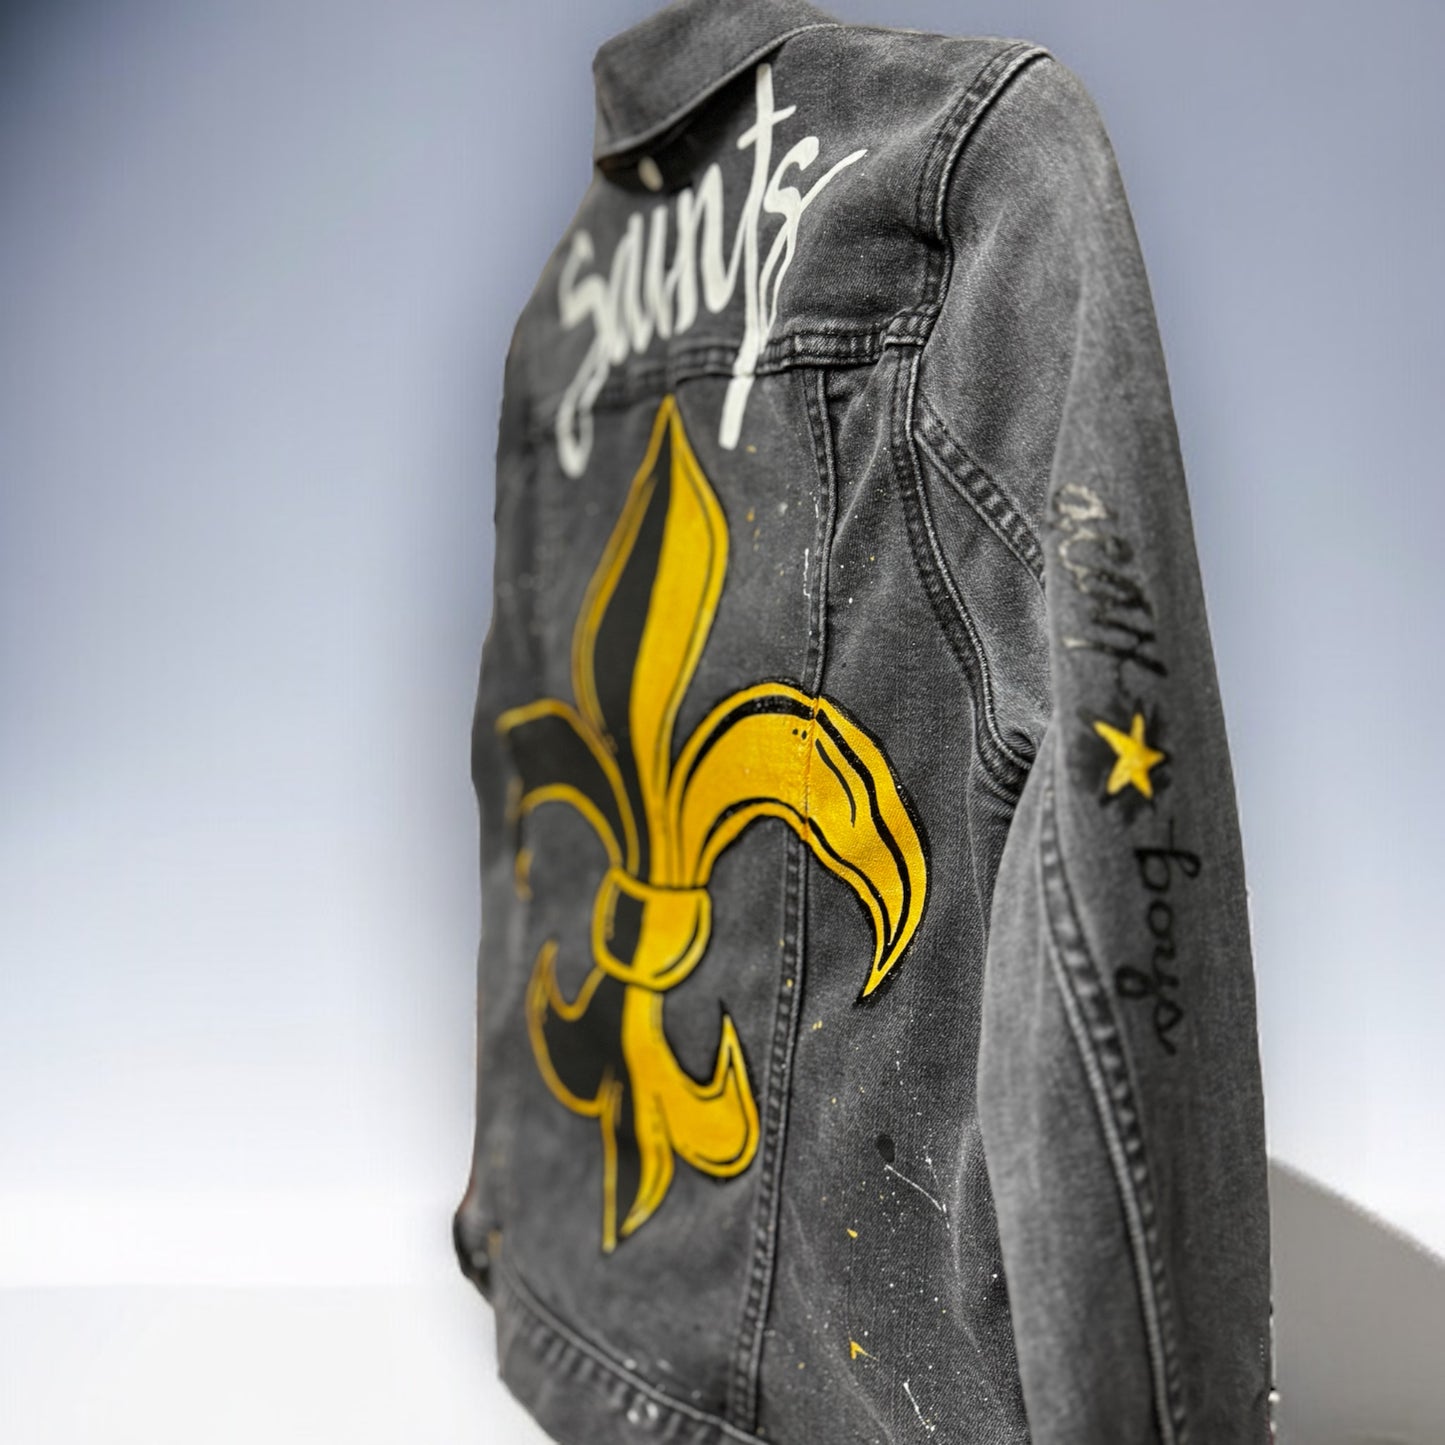 Hand Painted Jean Jacket:”Saints”, New Orleans Jacket, Hand Painted, NOLA Saints, Louisiana